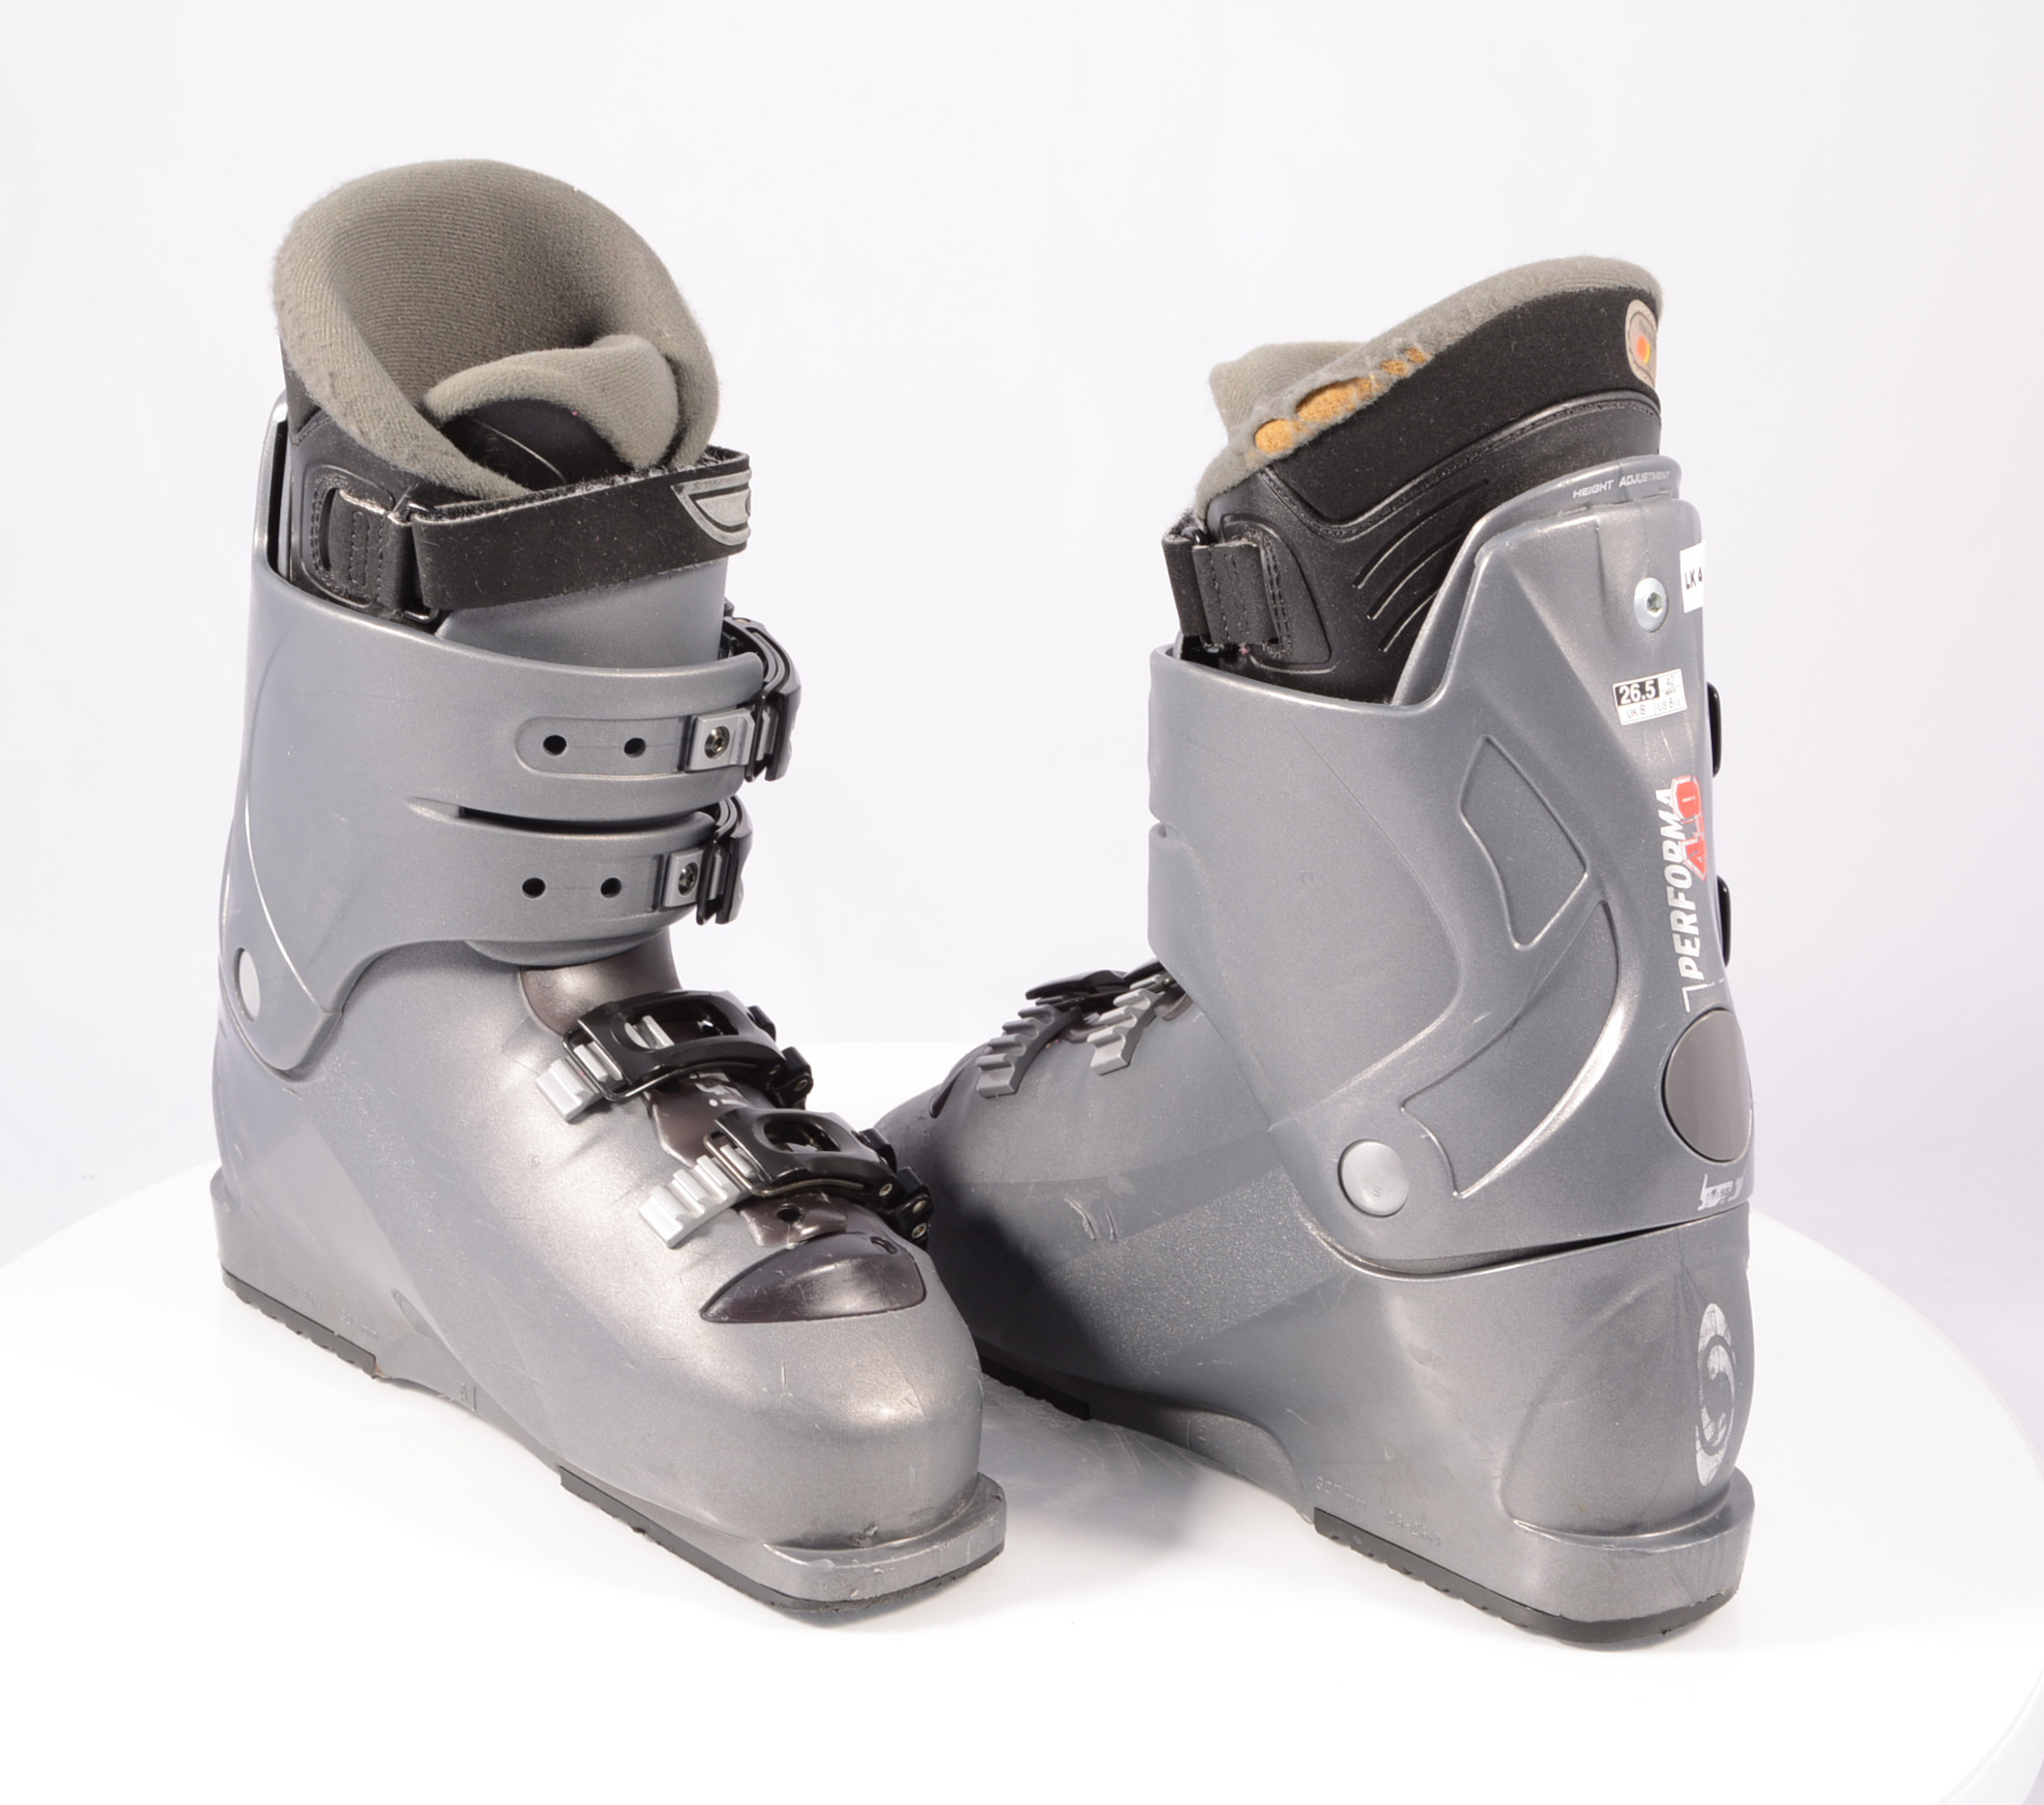 boots SALOMON PERFORMA 4.0, fit, adjustment, macro - Mardosport.com